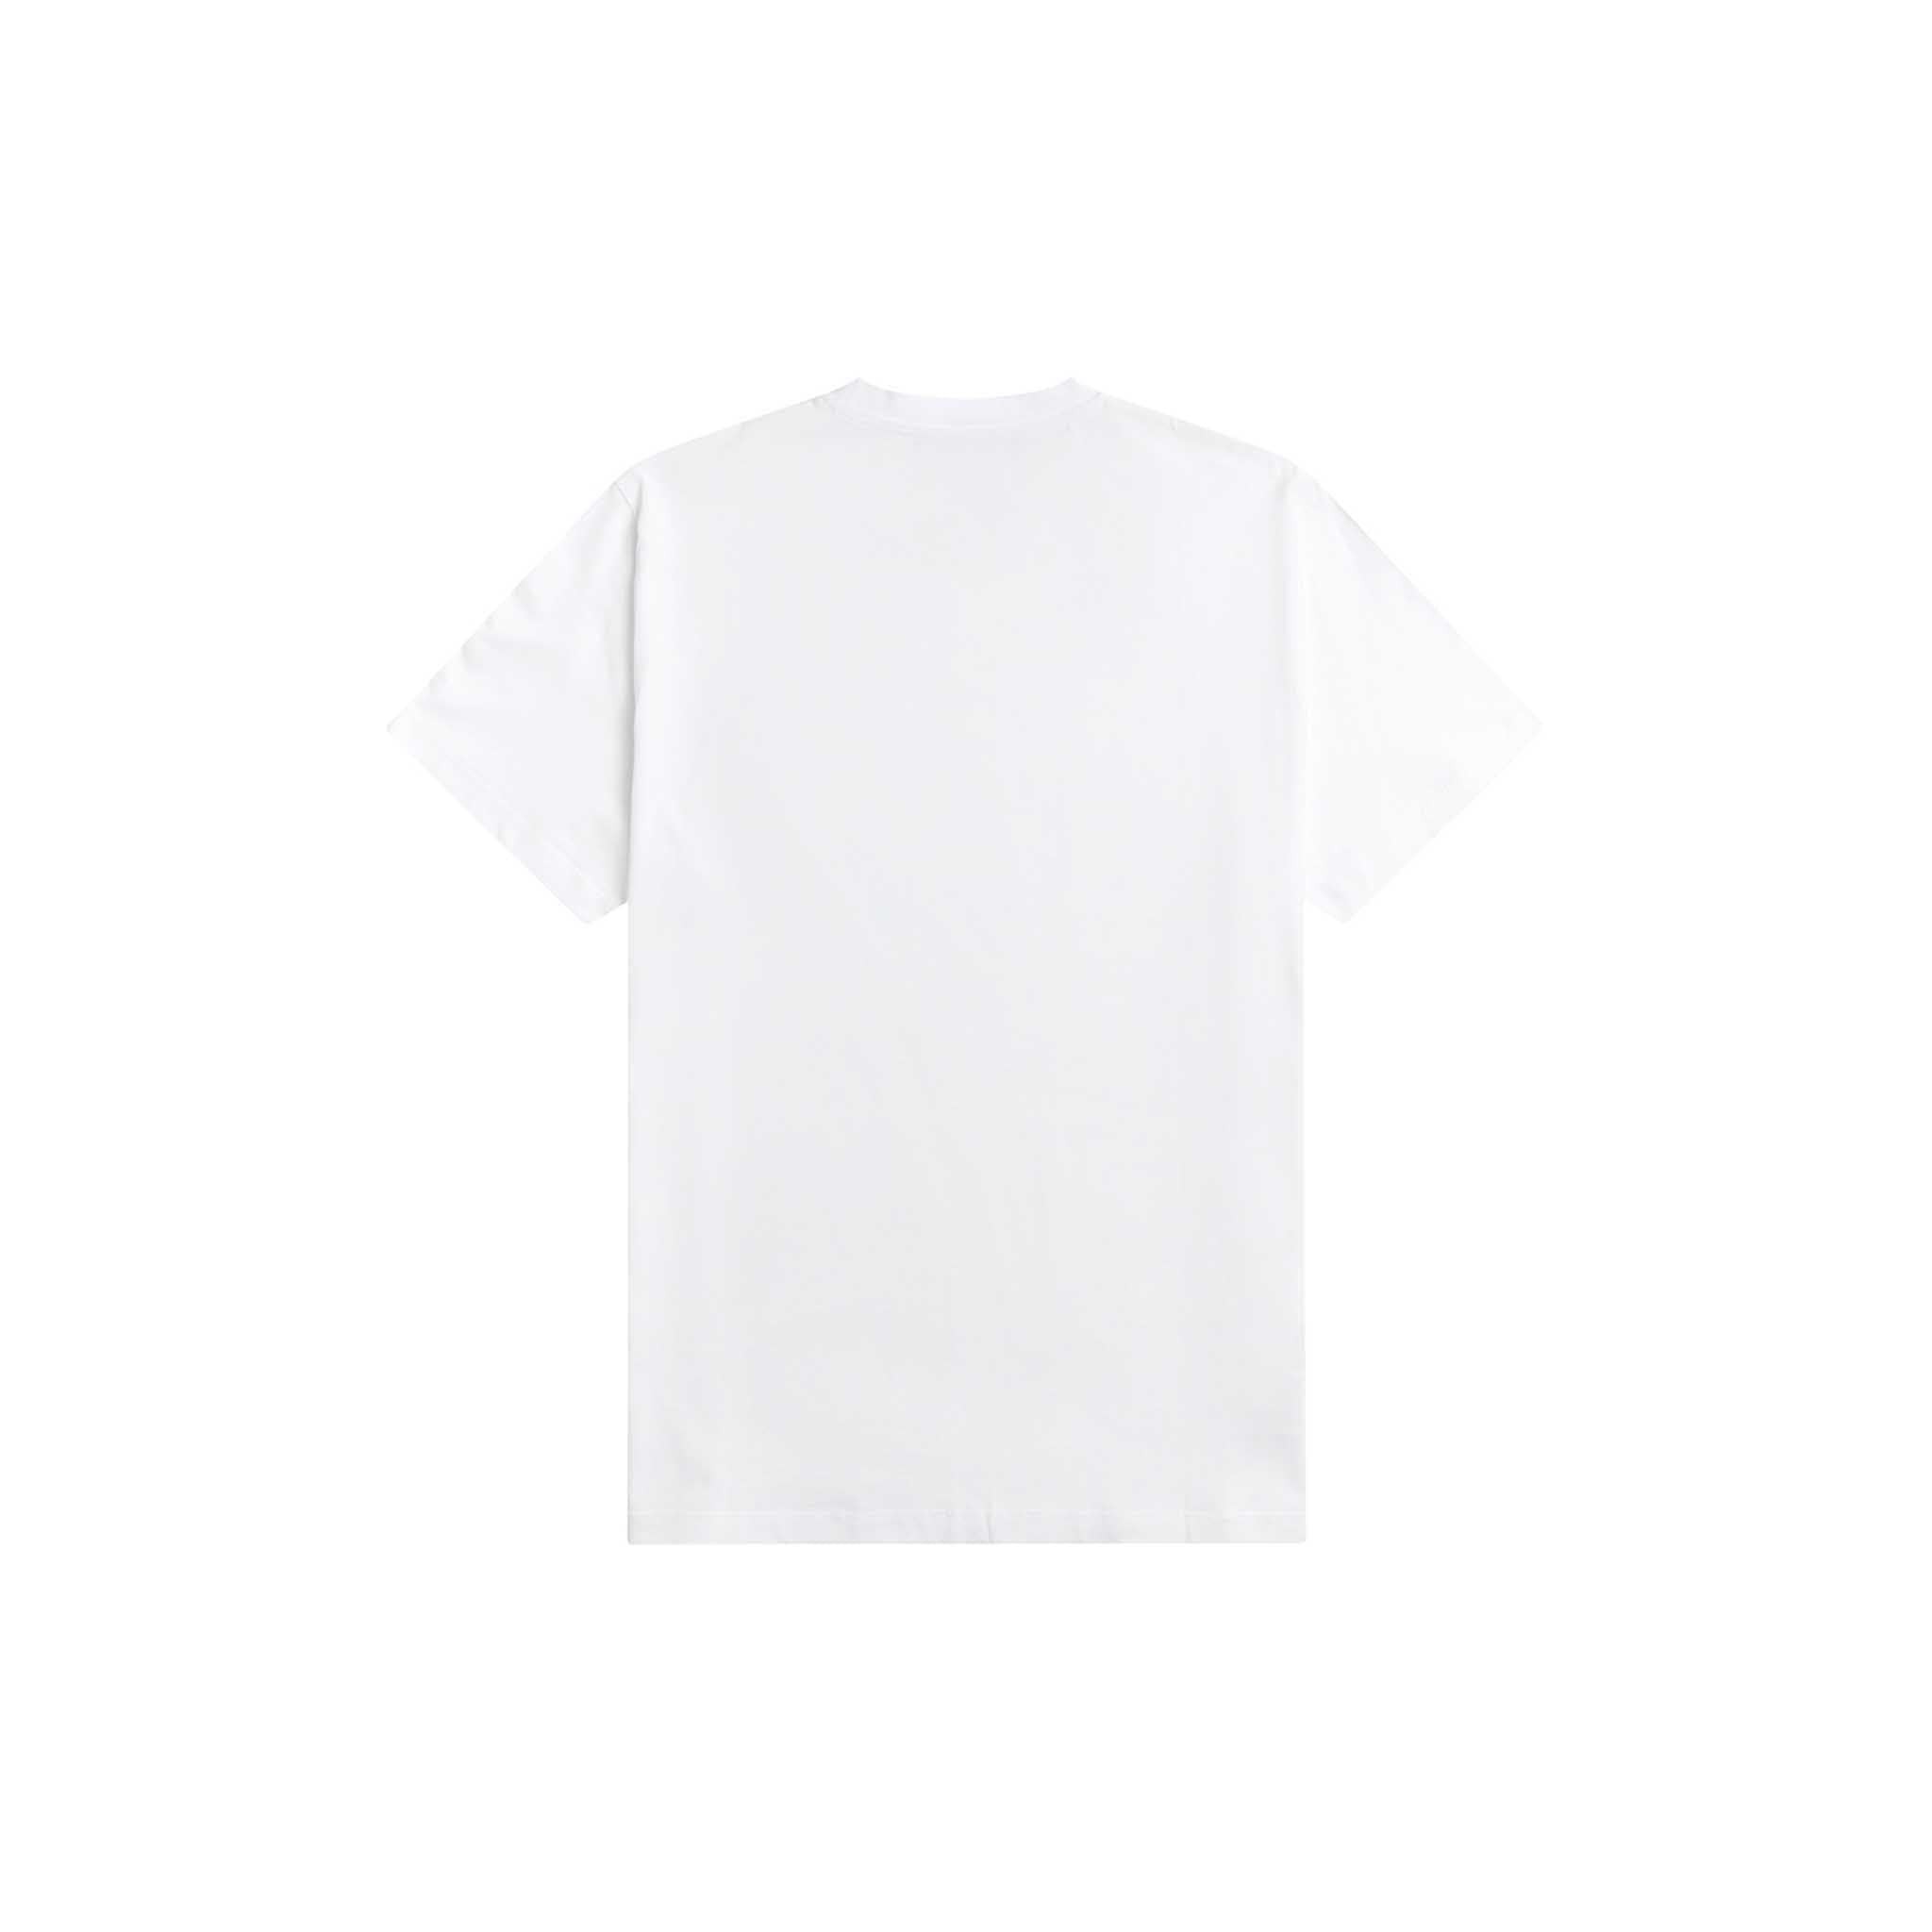 Fred Perry x Raf Simons Laurel Pin Detail T-Shirt White